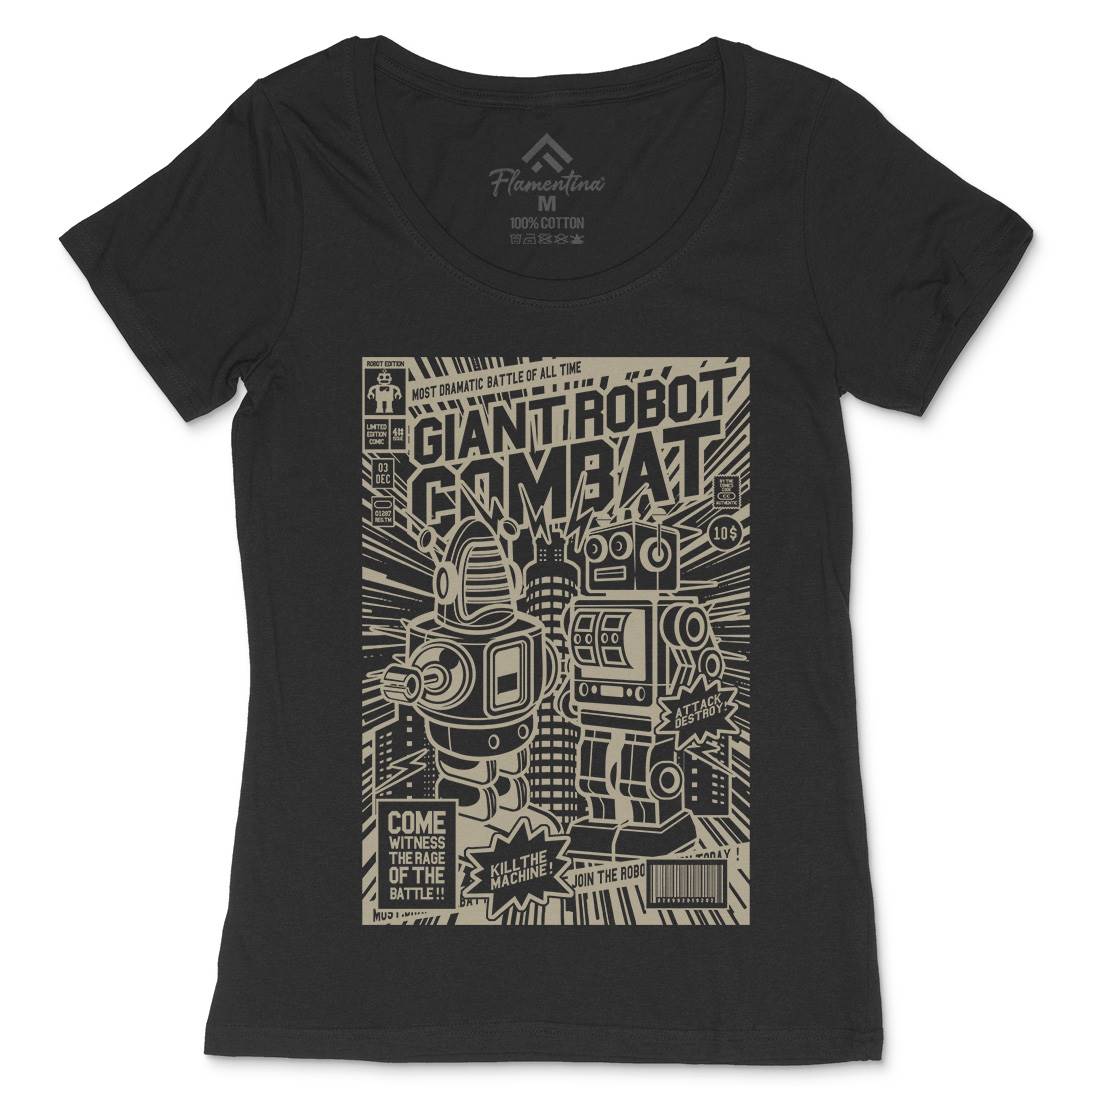 Giant Robot Combat Womens Scoop Neck T-Shirt Space A233